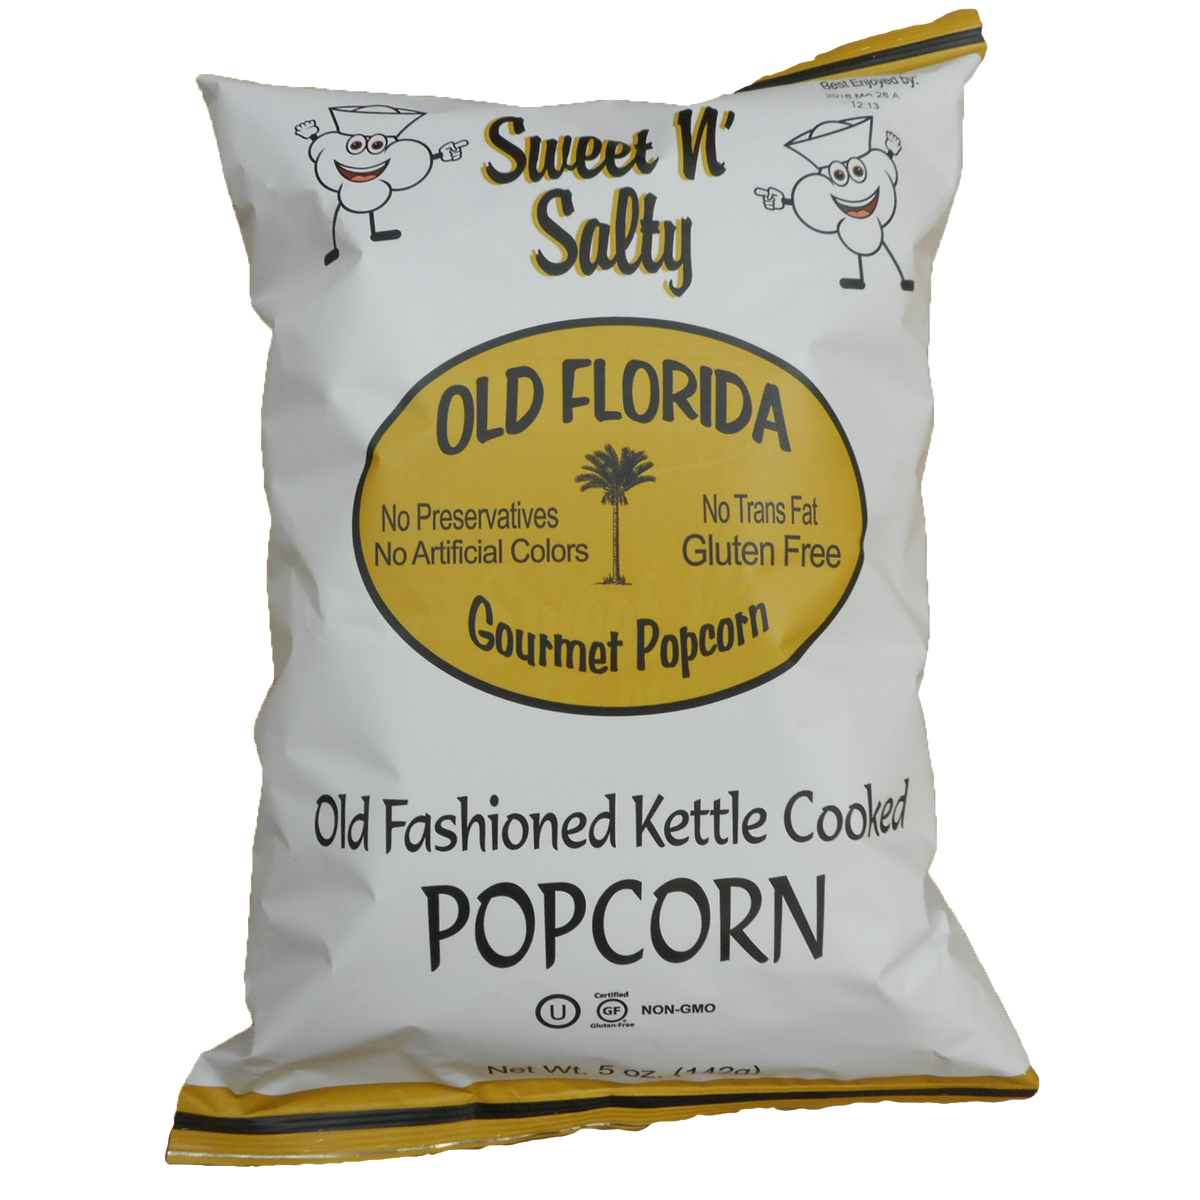 Old Florida Sweet & Salty Popcorn 11oz